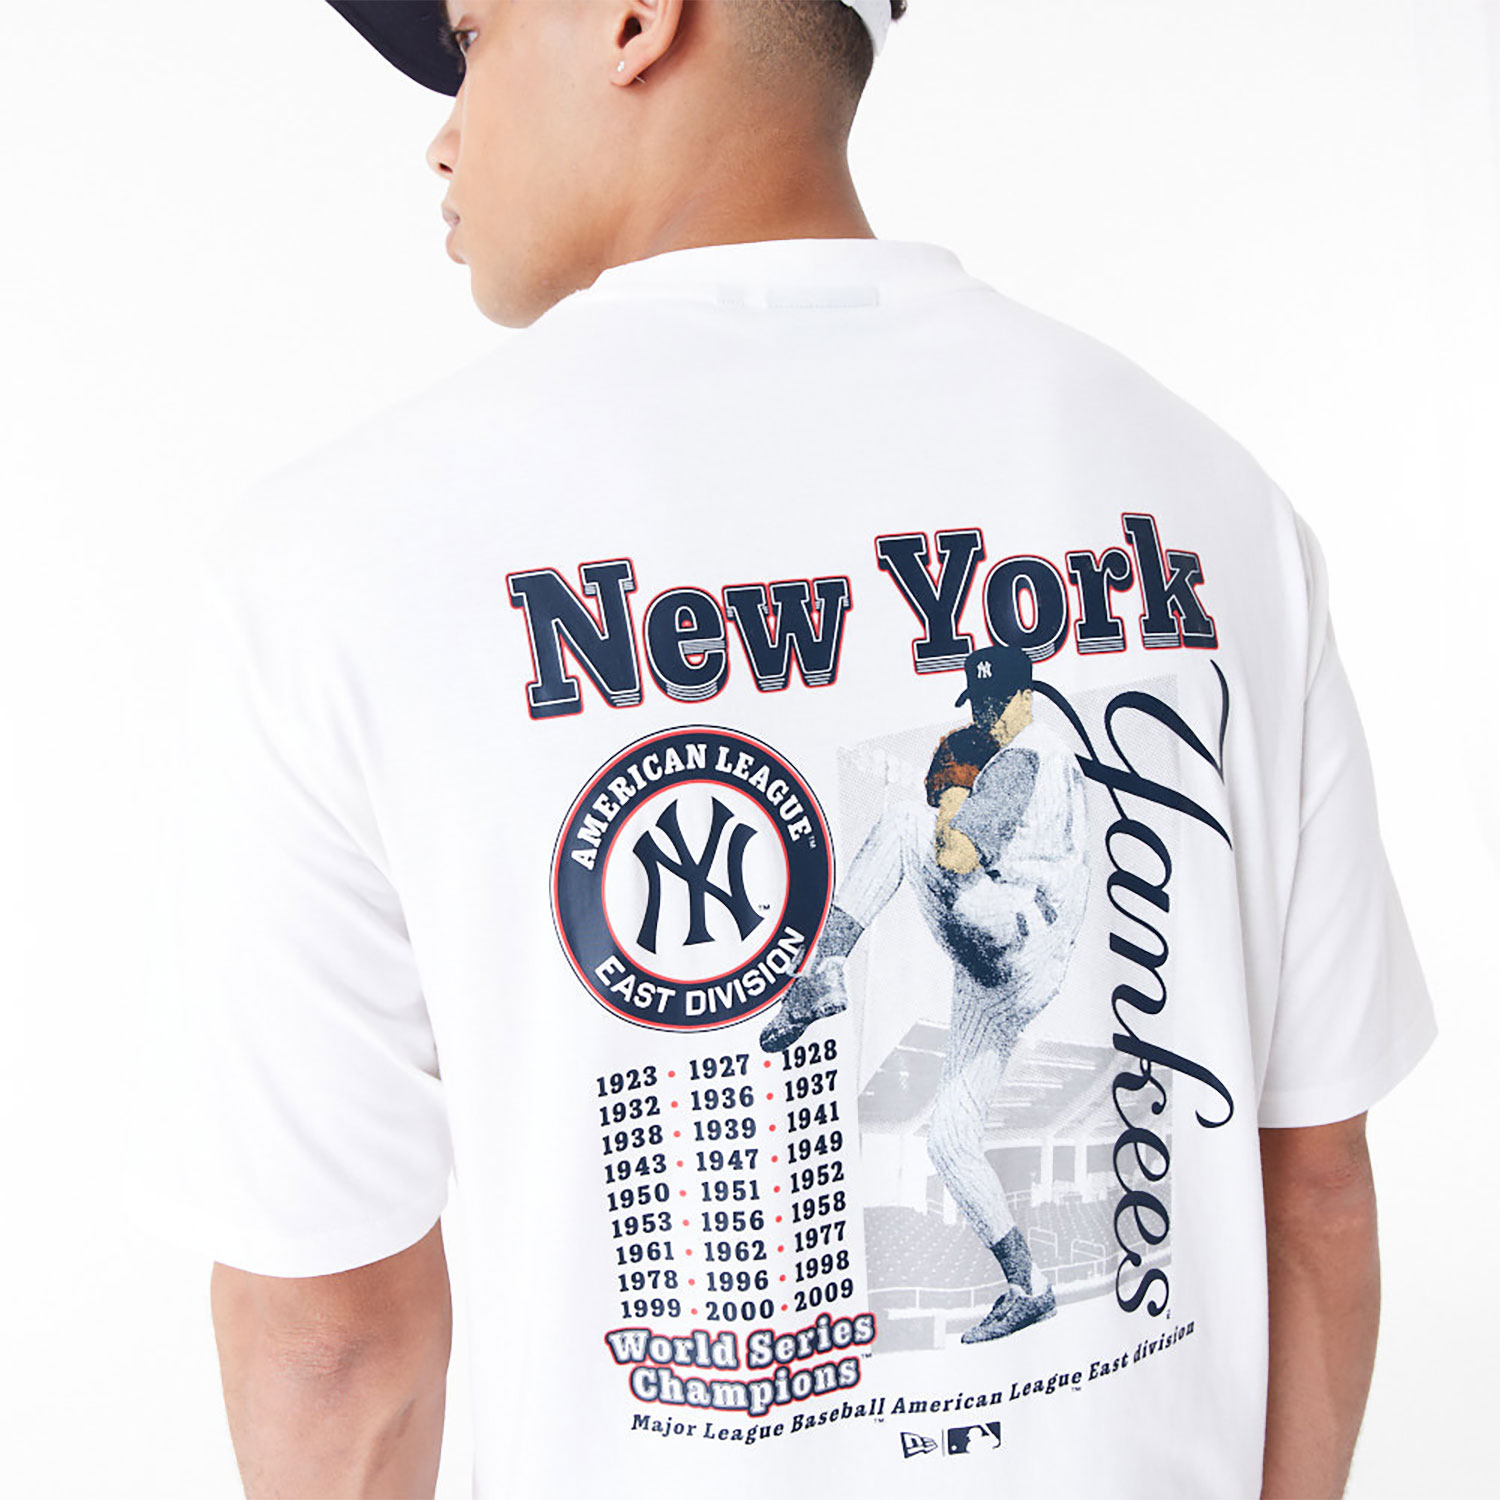 Camiseta Béisbol Hombre MLB Fielder Jersey New York Yankees Blanco/Azul